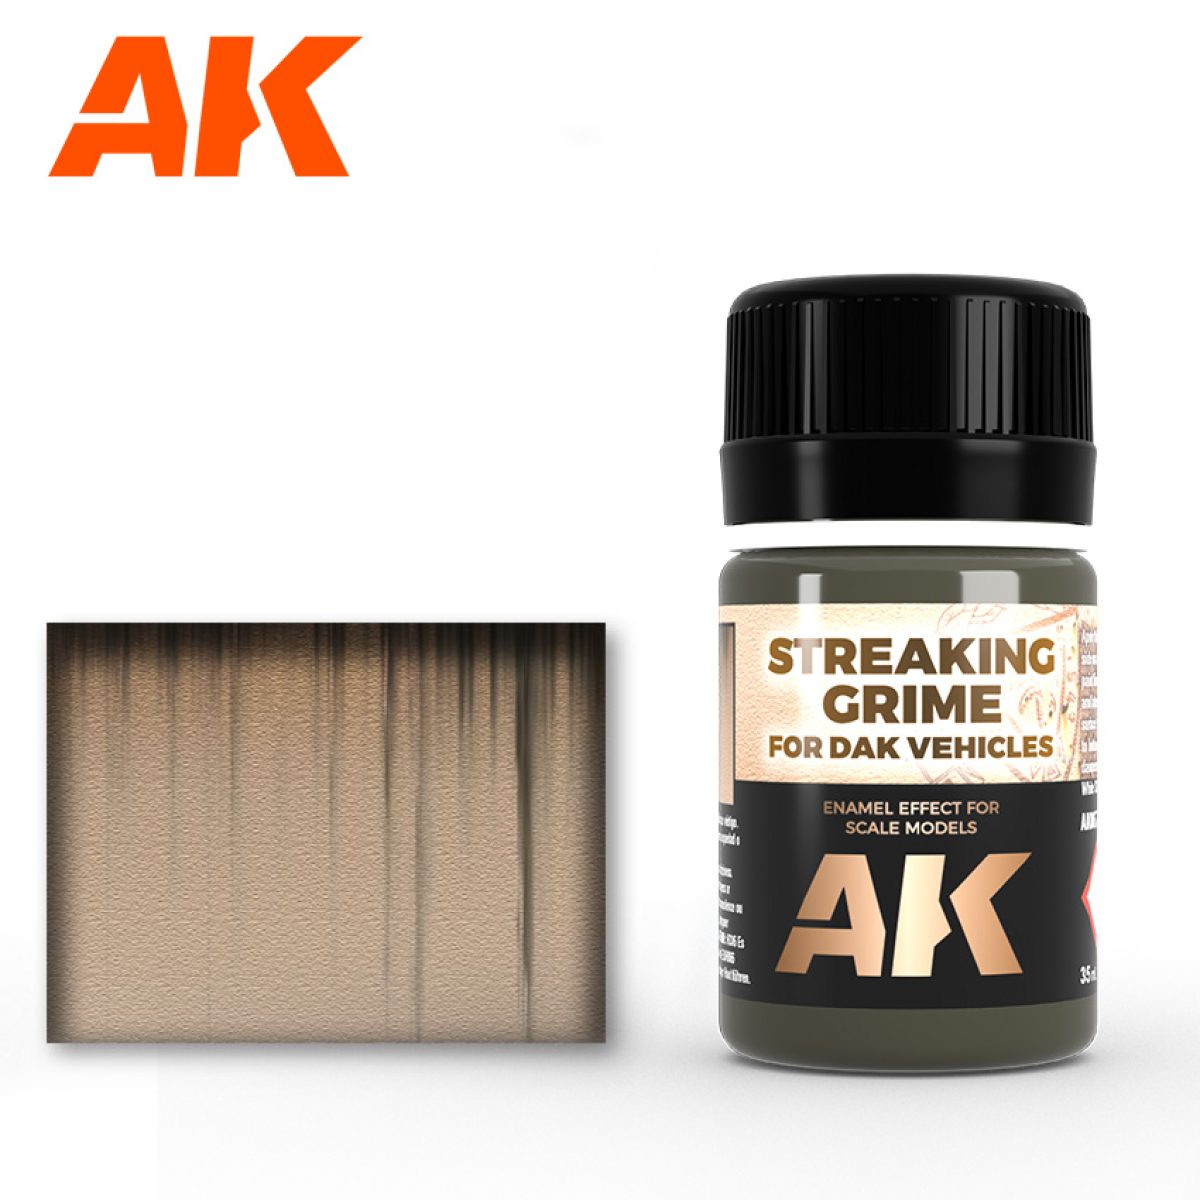 Buy Streaking Grime online for 3,75€